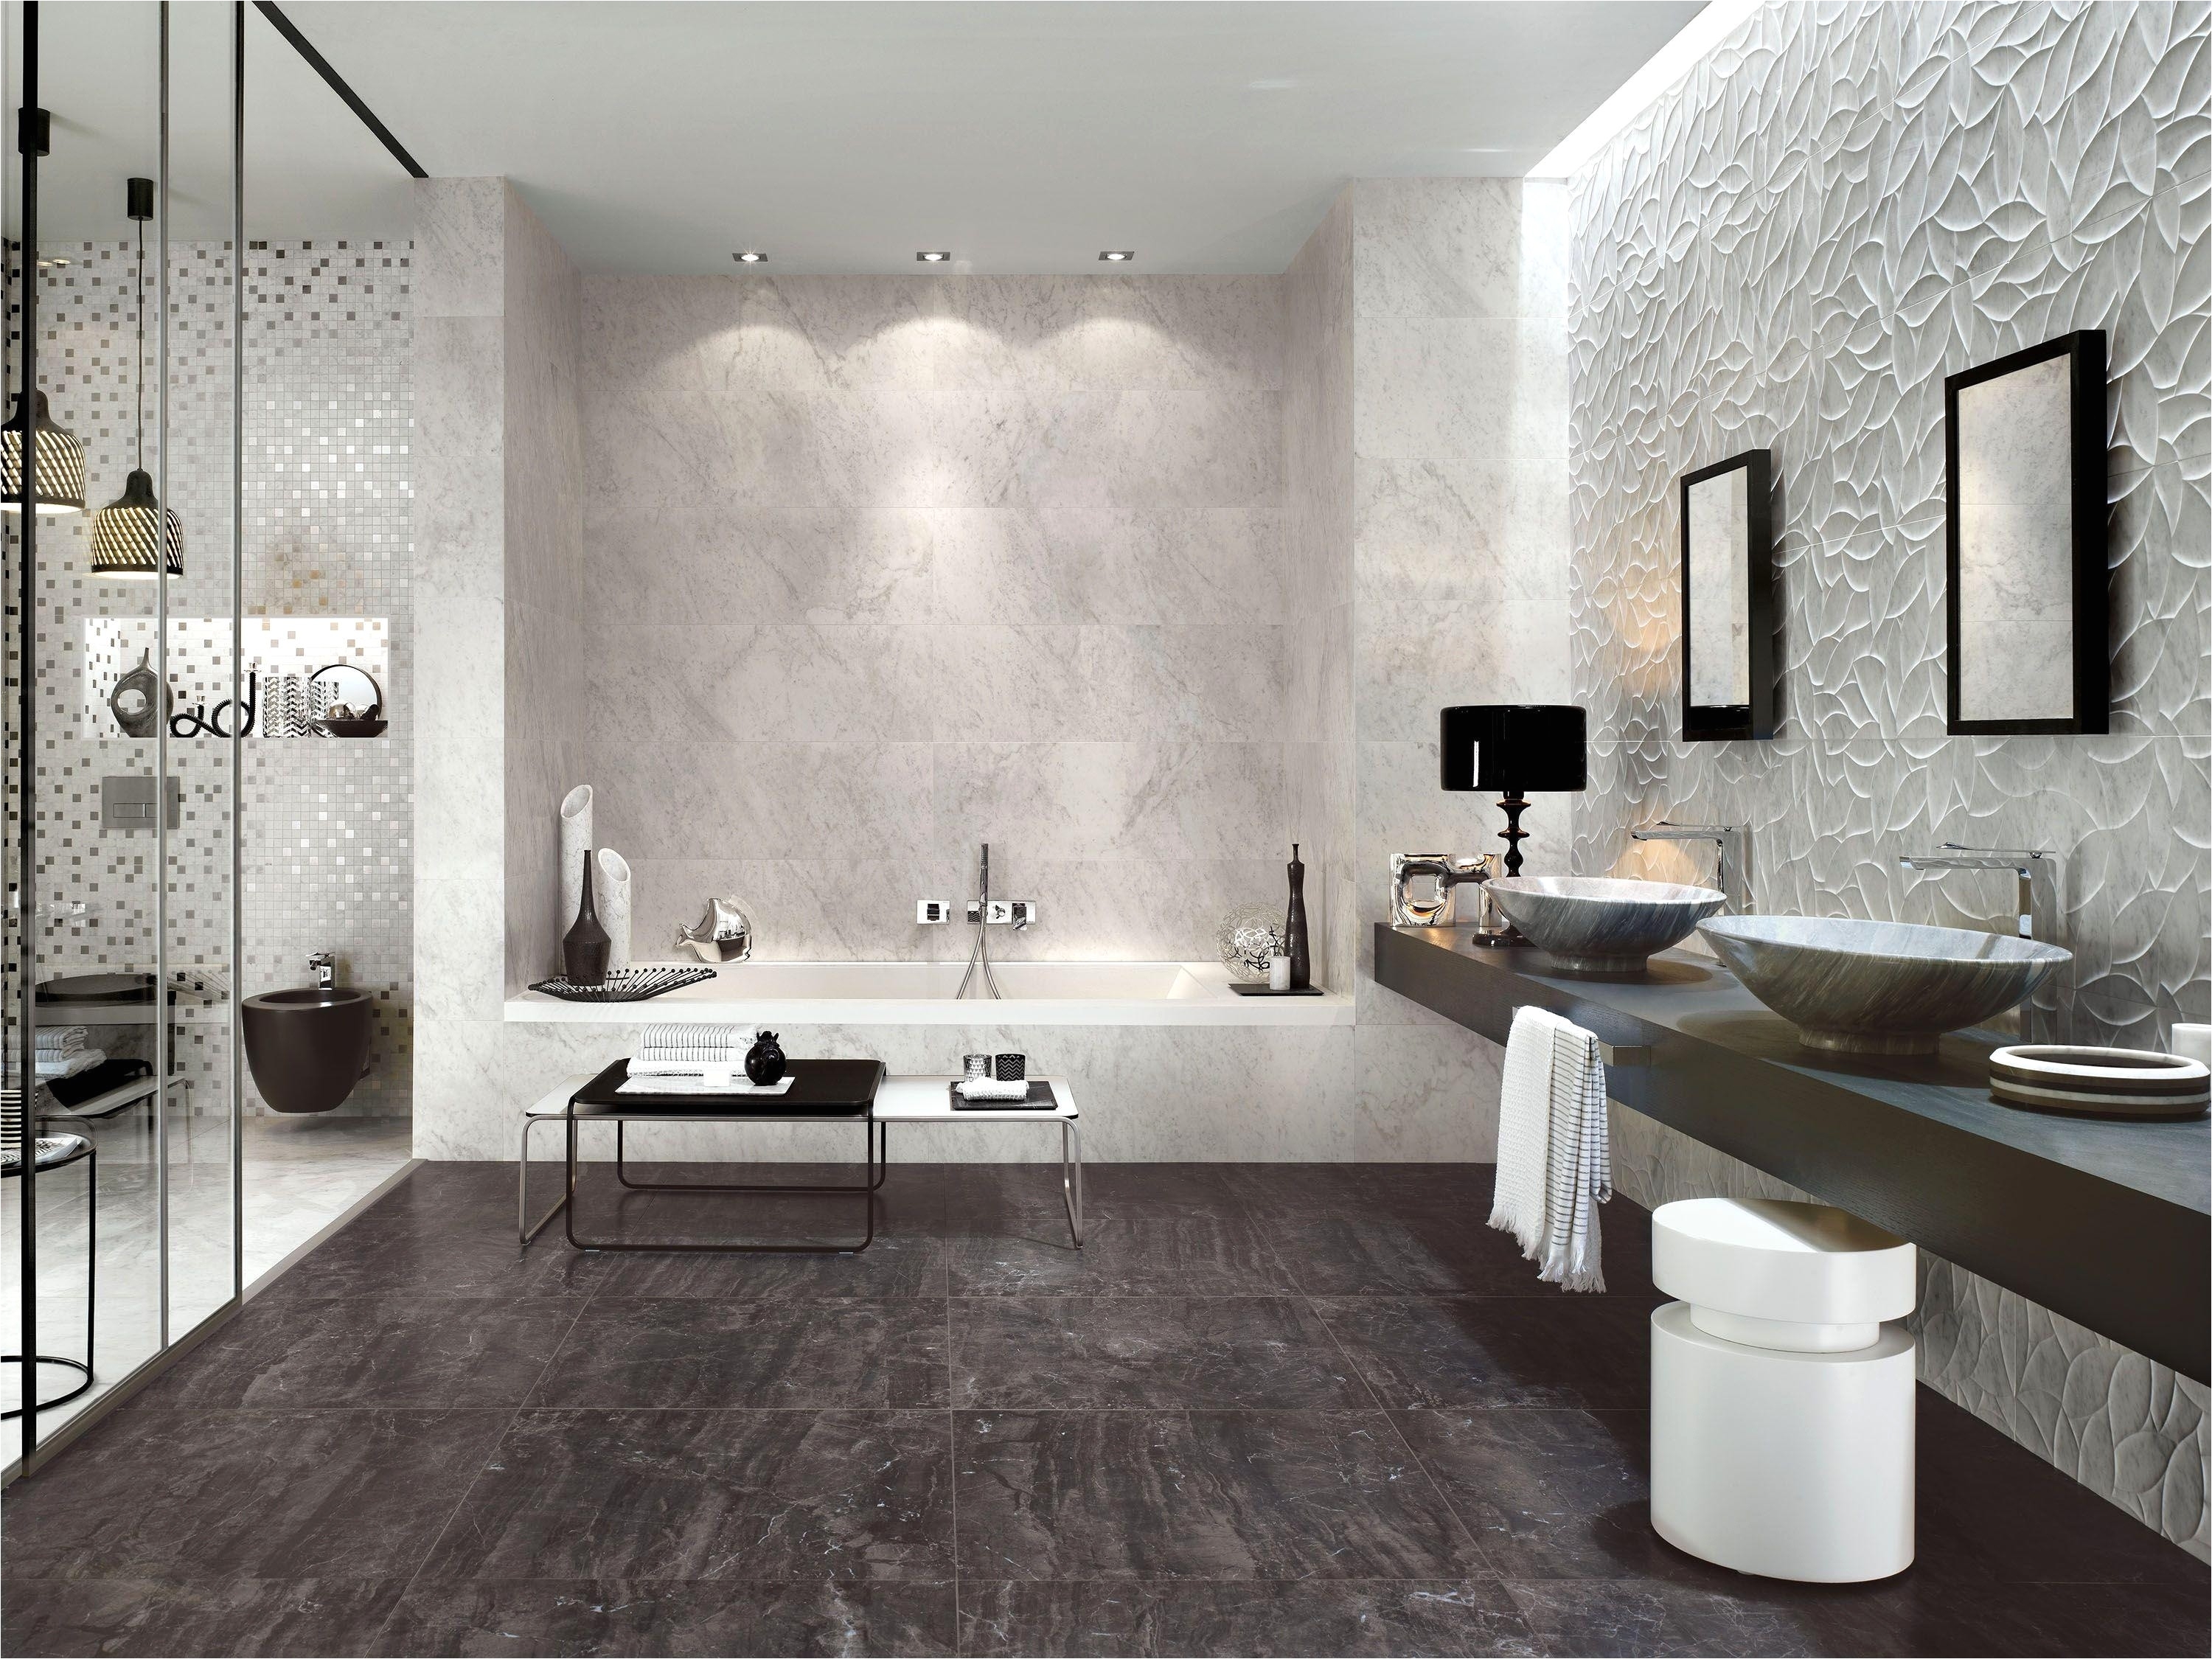 Bathroom Mosaic Designs New Bathroom Floor Tile Design Ideas New Floor Tiles Mosaic Bathroom 0d